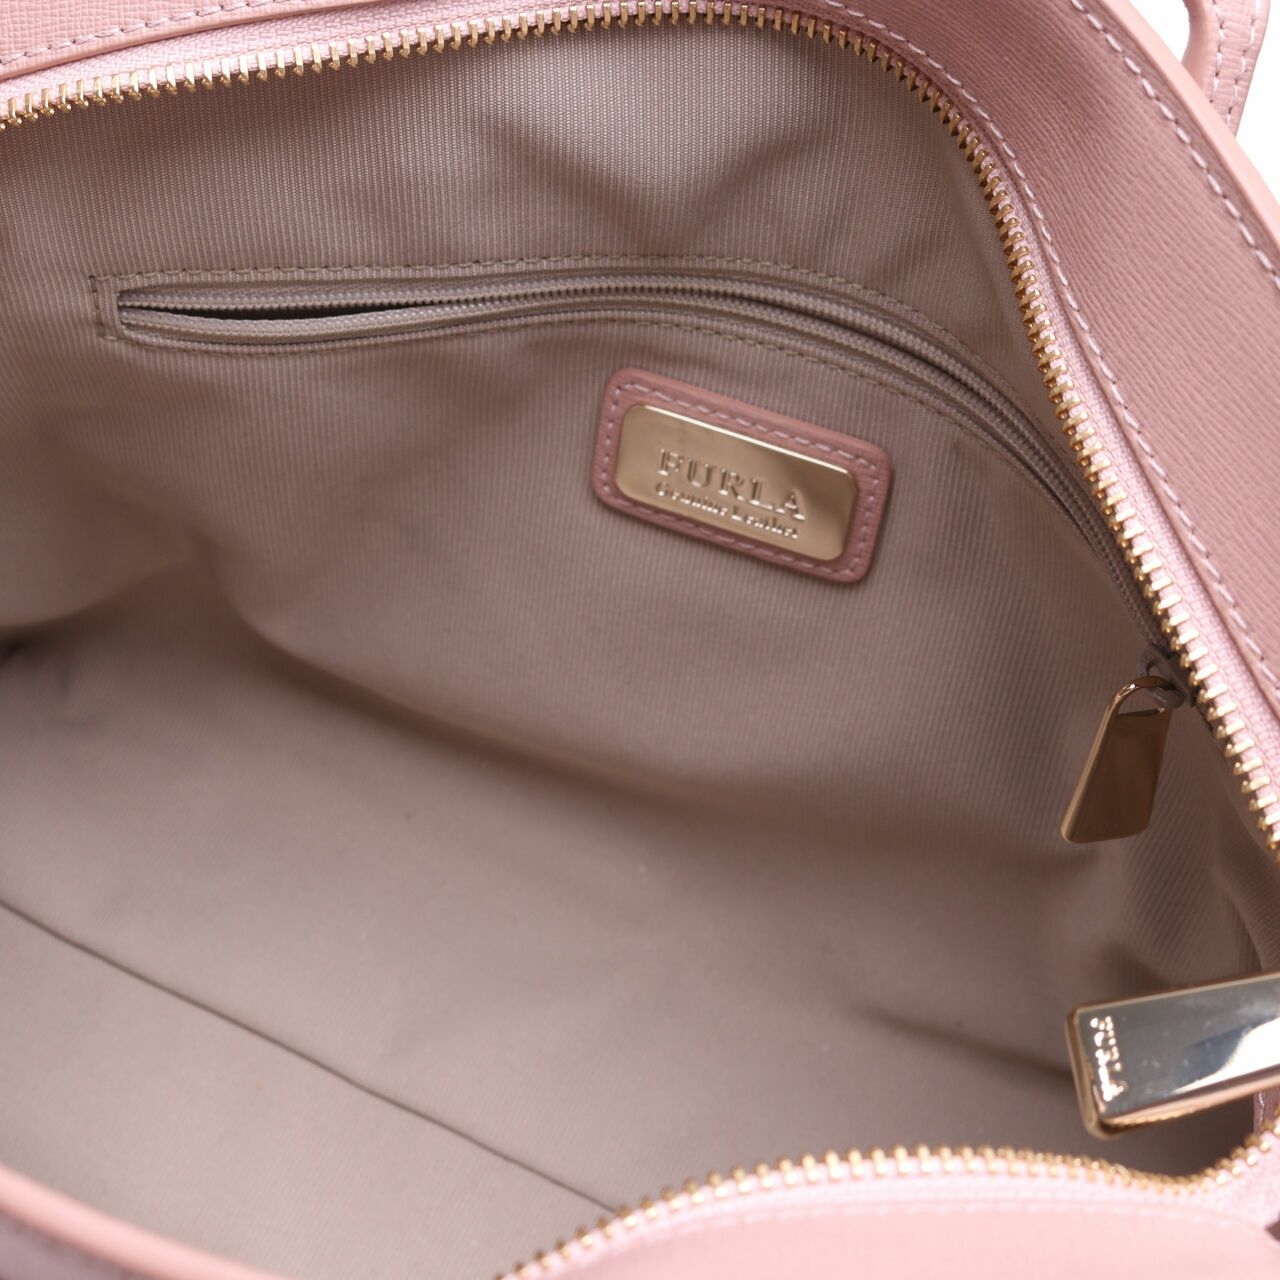 Furla Agata Medium Pink Satchel Bag